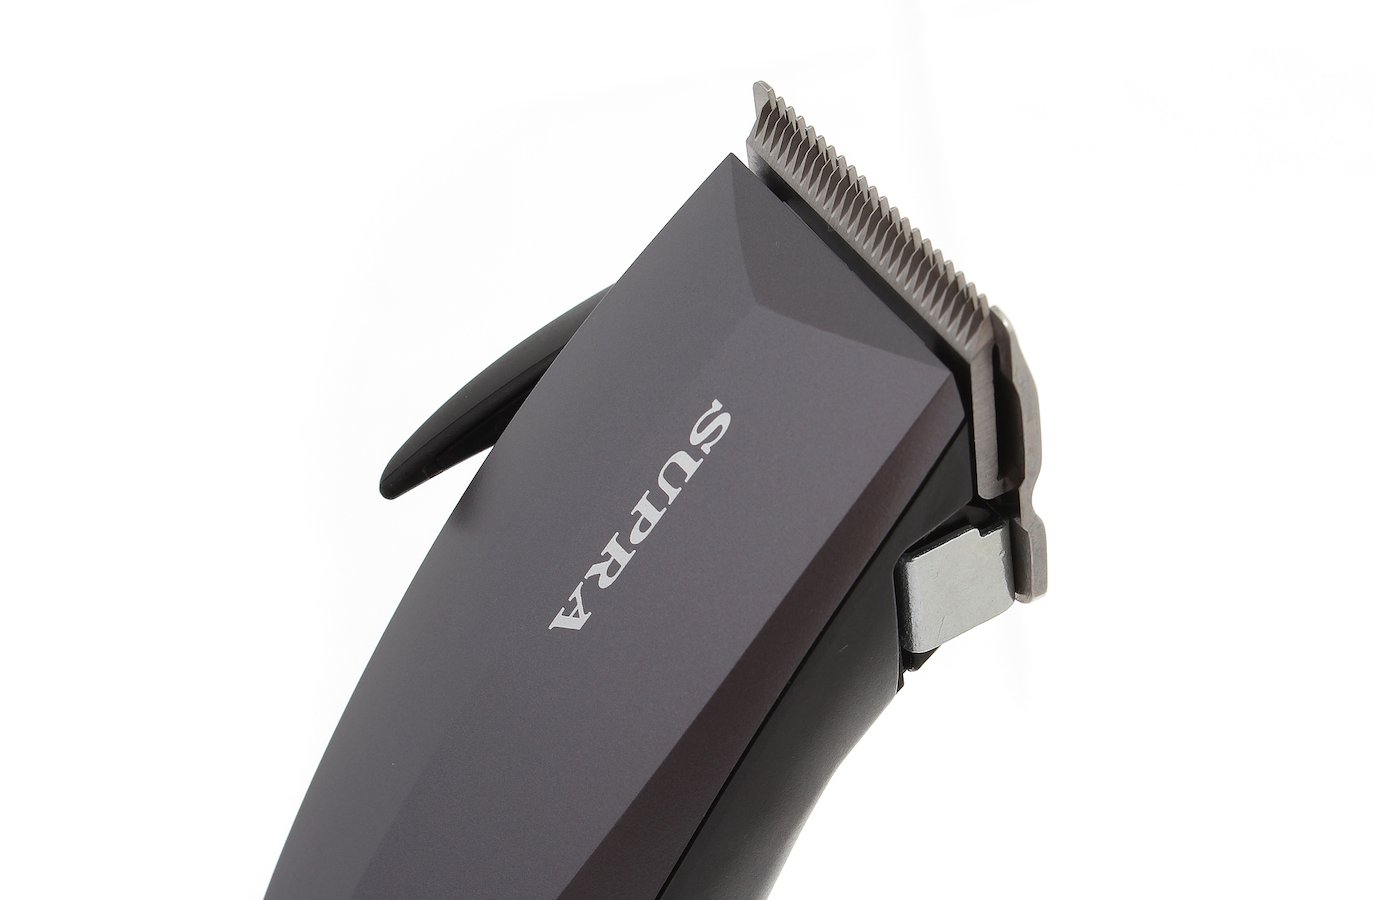 Supra hcs-620 для стрижки волос темно-серый